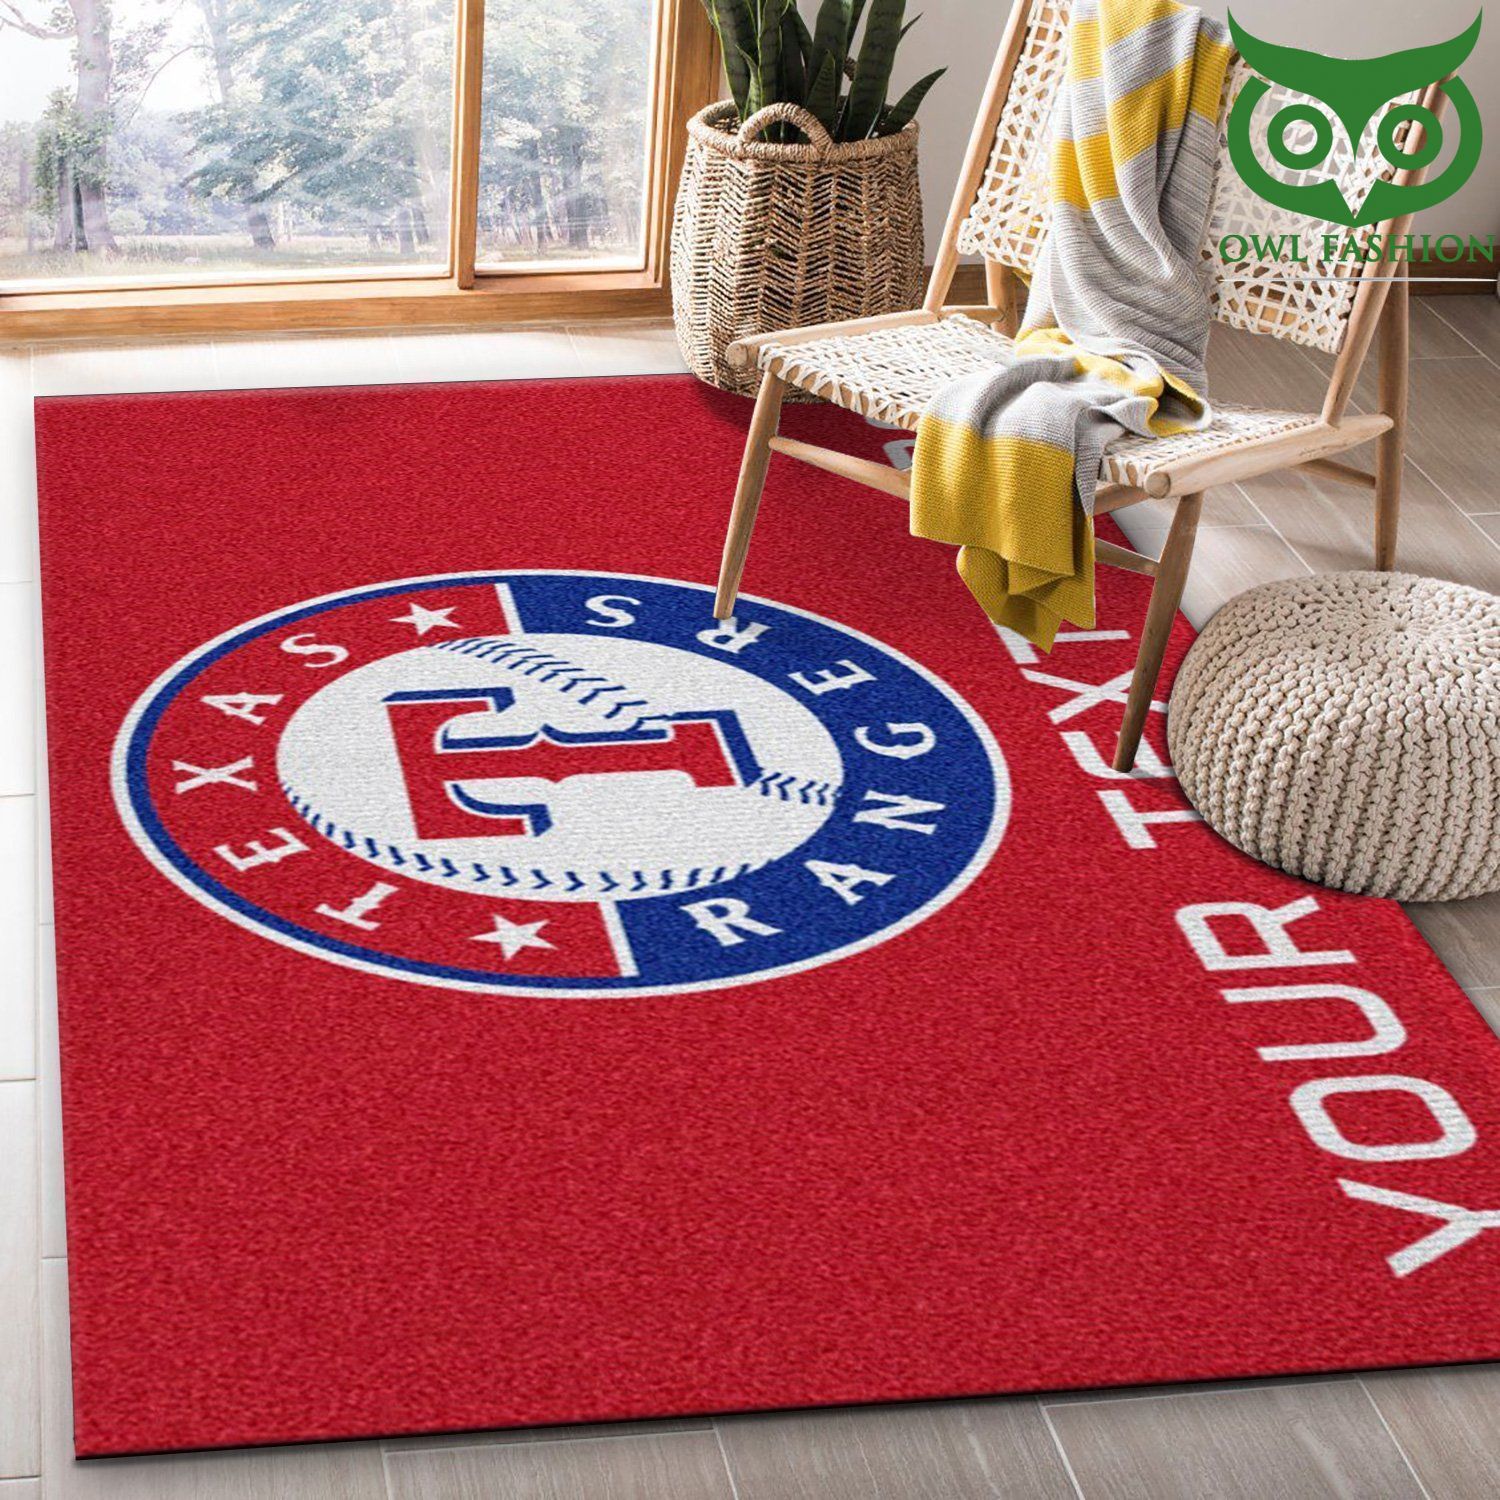 45 Customizable Texas Rangers MLB Team Logos carpet rug